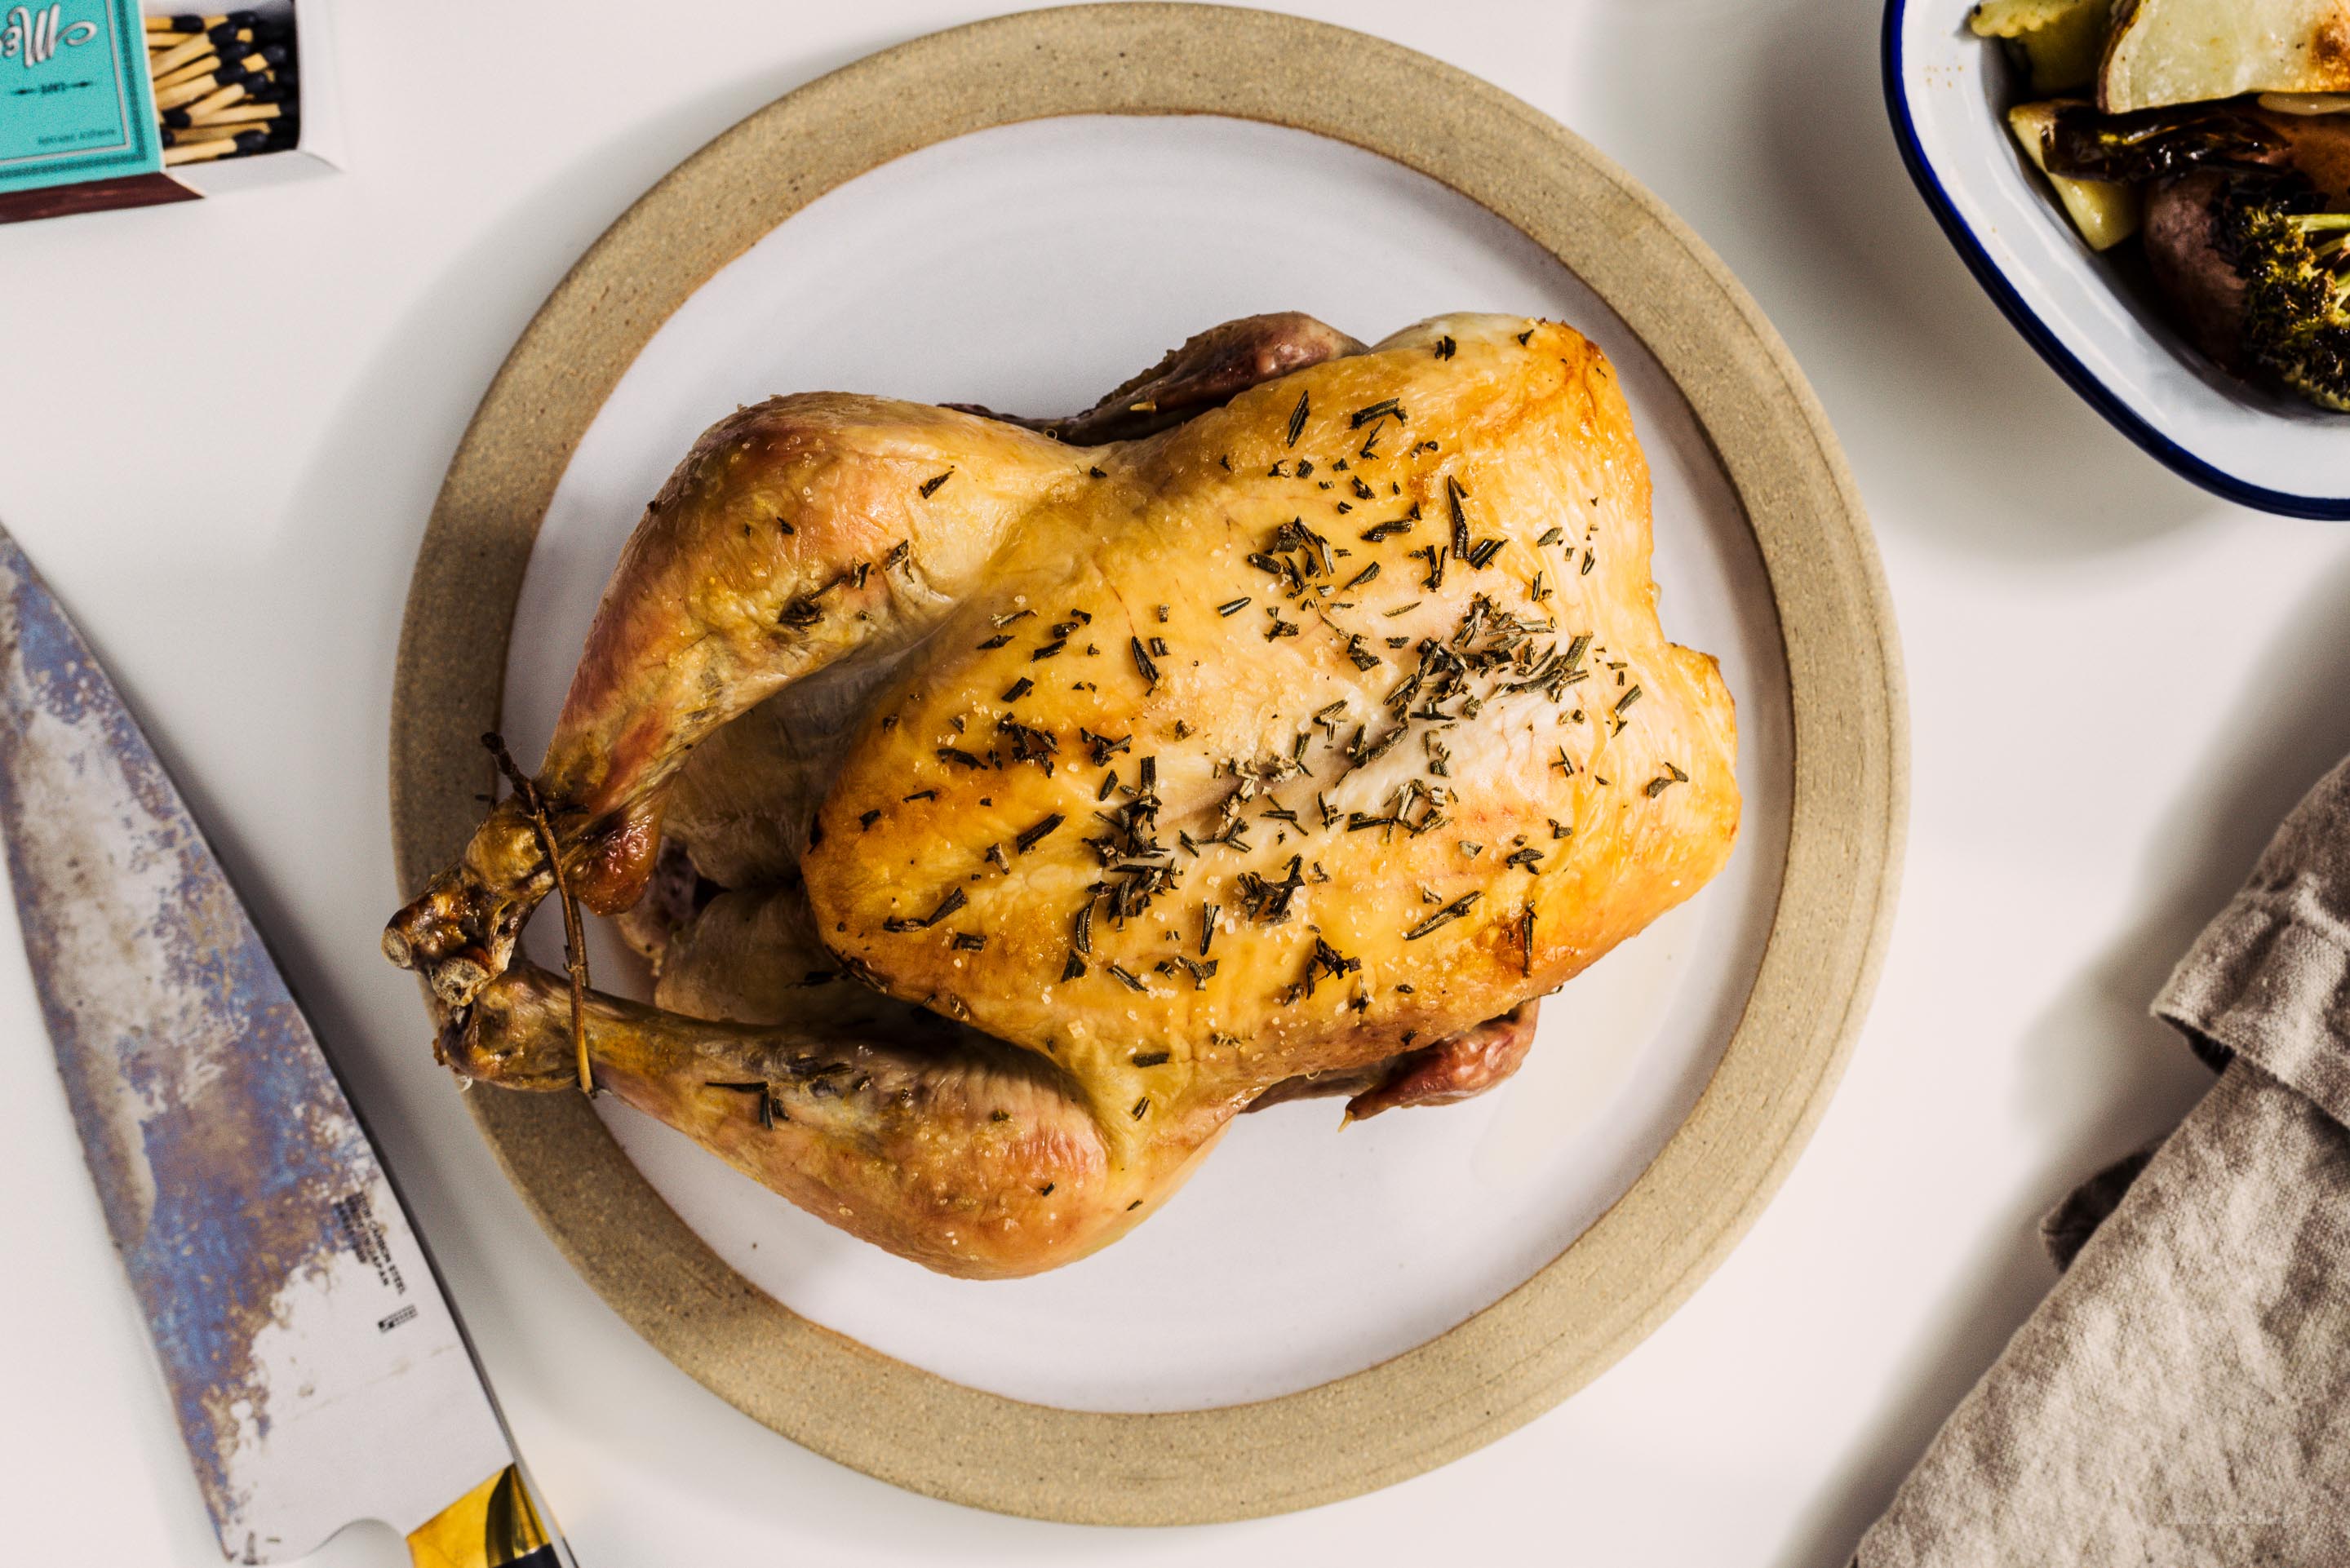 The best way to roast chicken is Thomas Keller’s perfect 3 ingredient roast chicken recipe